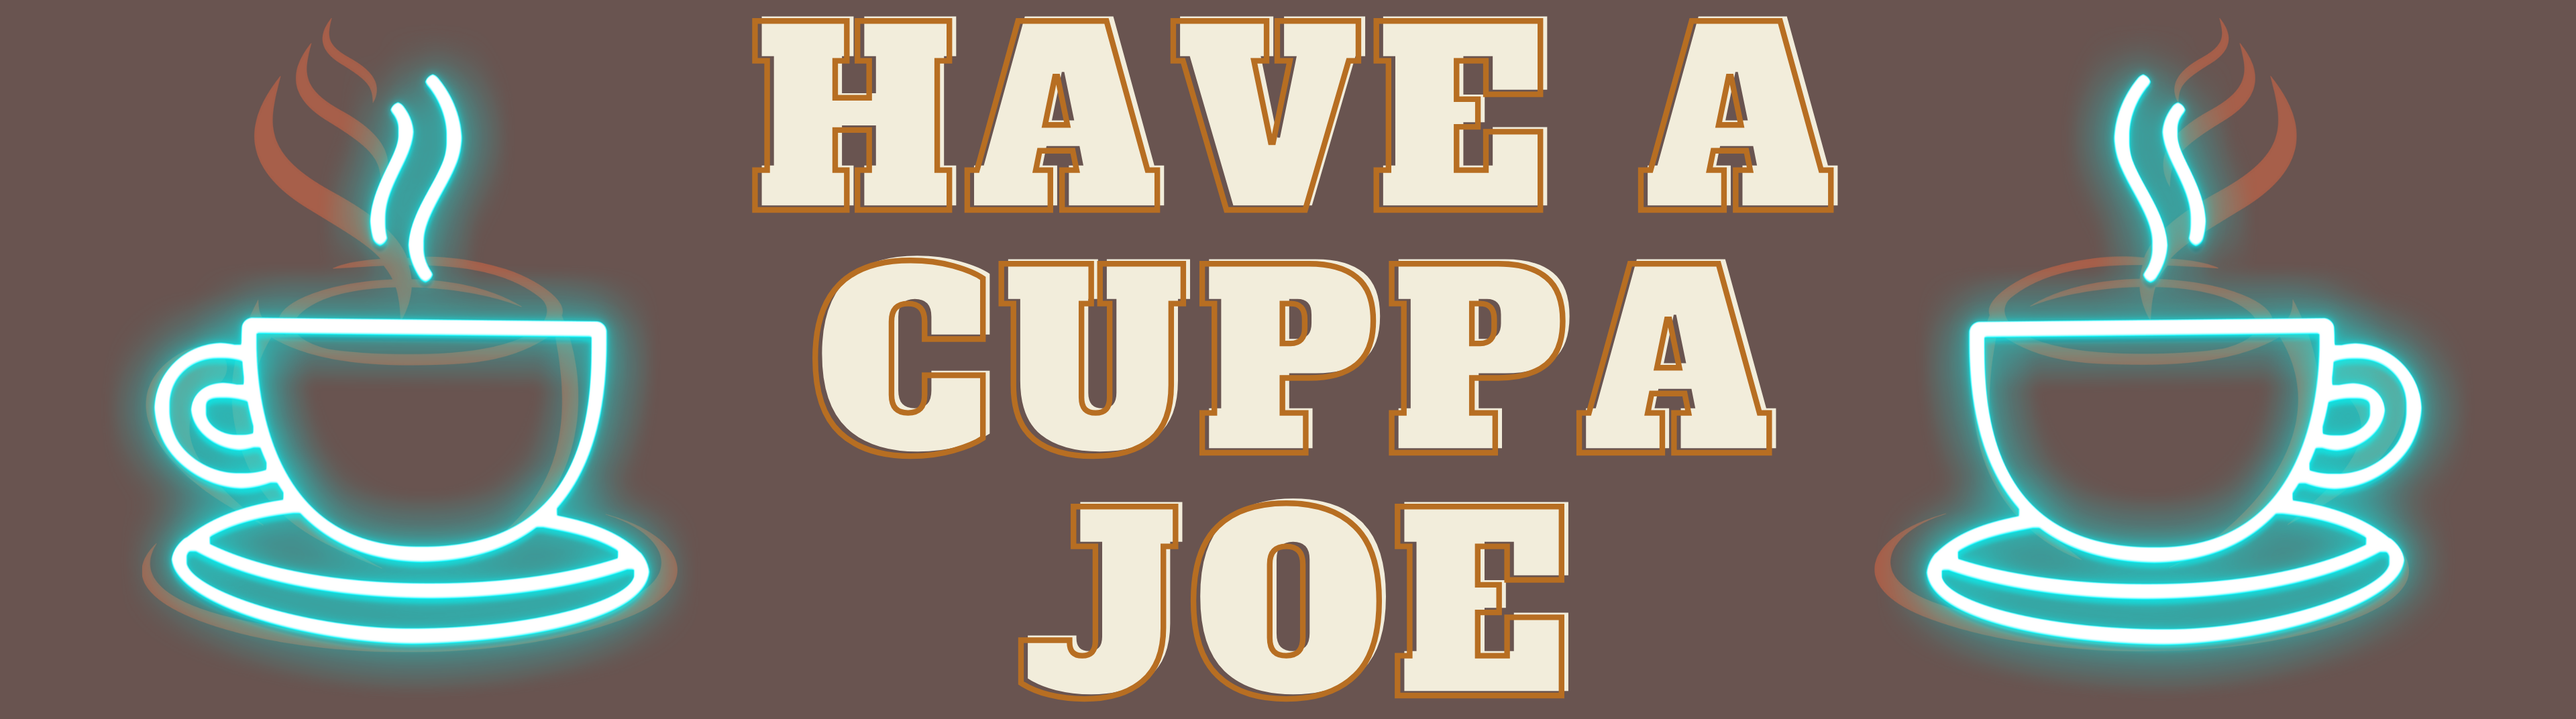 Have a Cuppa Joe